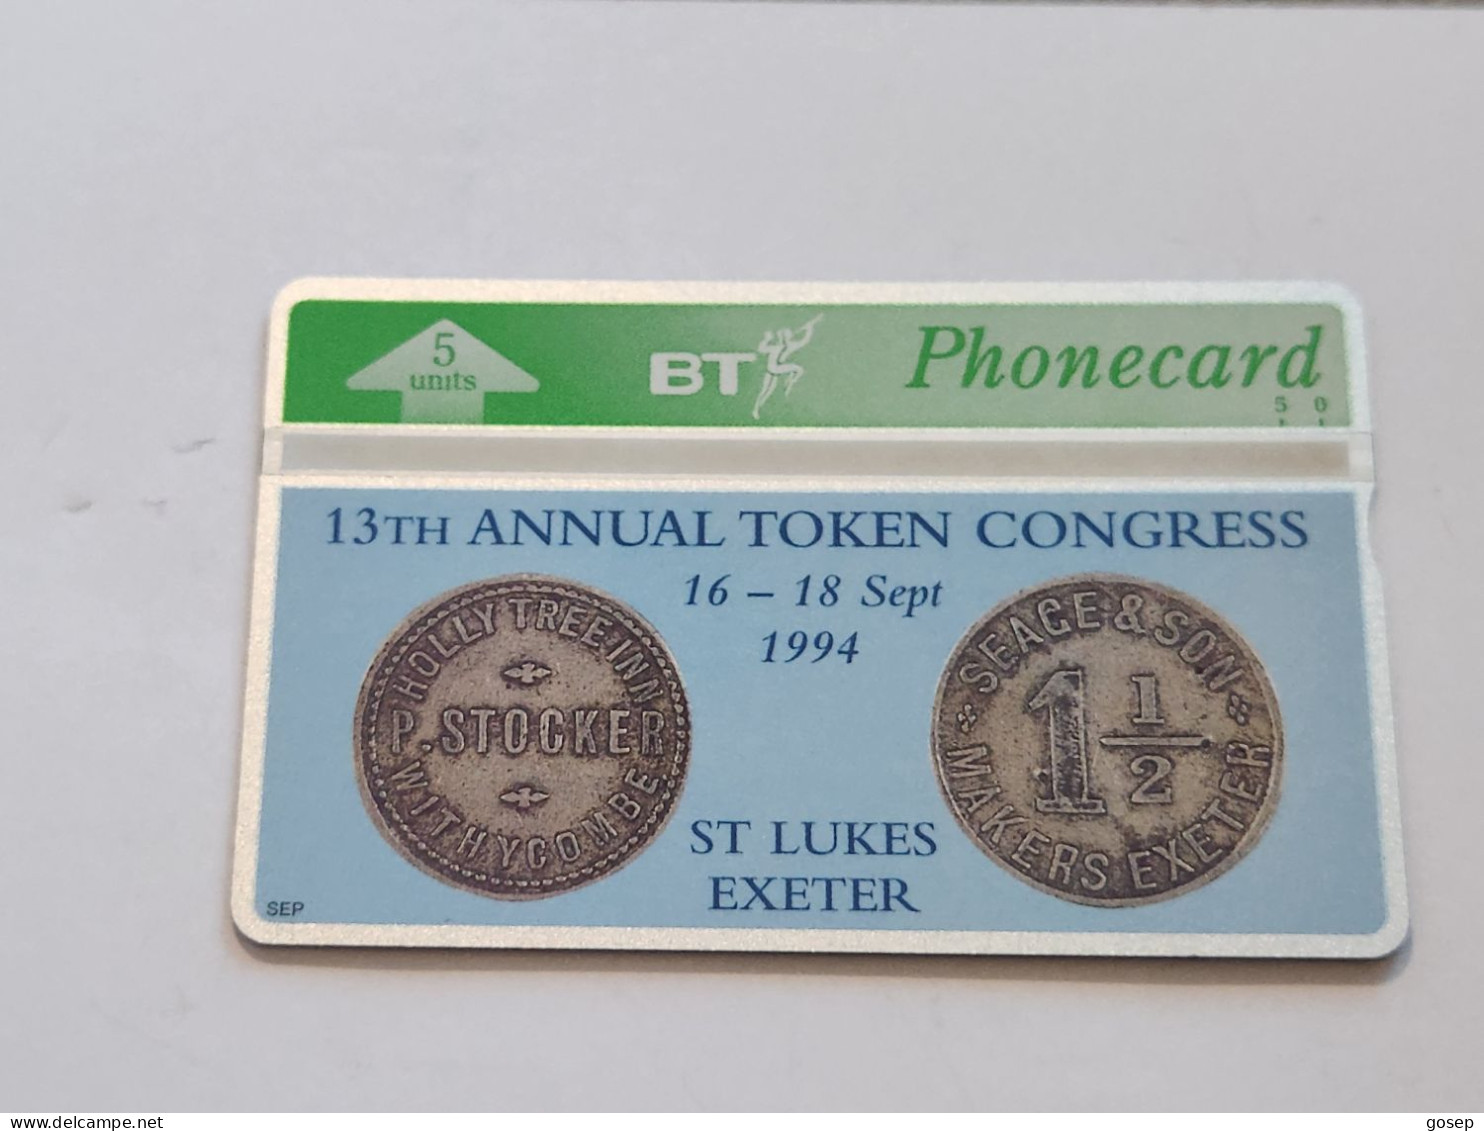 United Kingdom-(BTG-366)-13th Annual Token Congress-(323)(5units)(408F06766)(tirage-500)-price Cataloge--10.00£-mint - BT General Issues